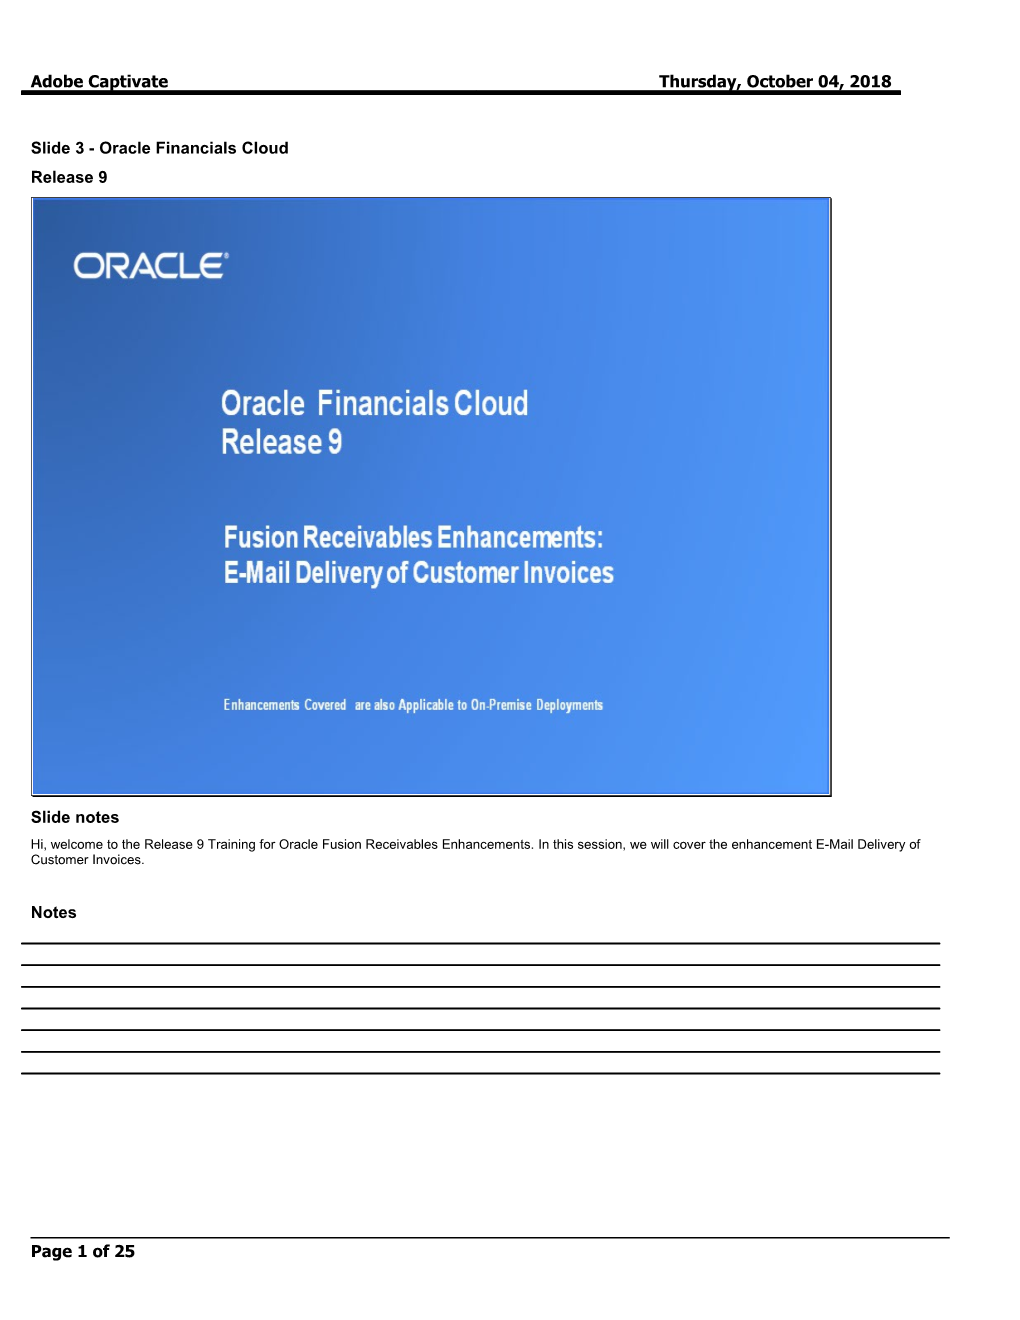 Slide 3 - Oracle Financials Cloud